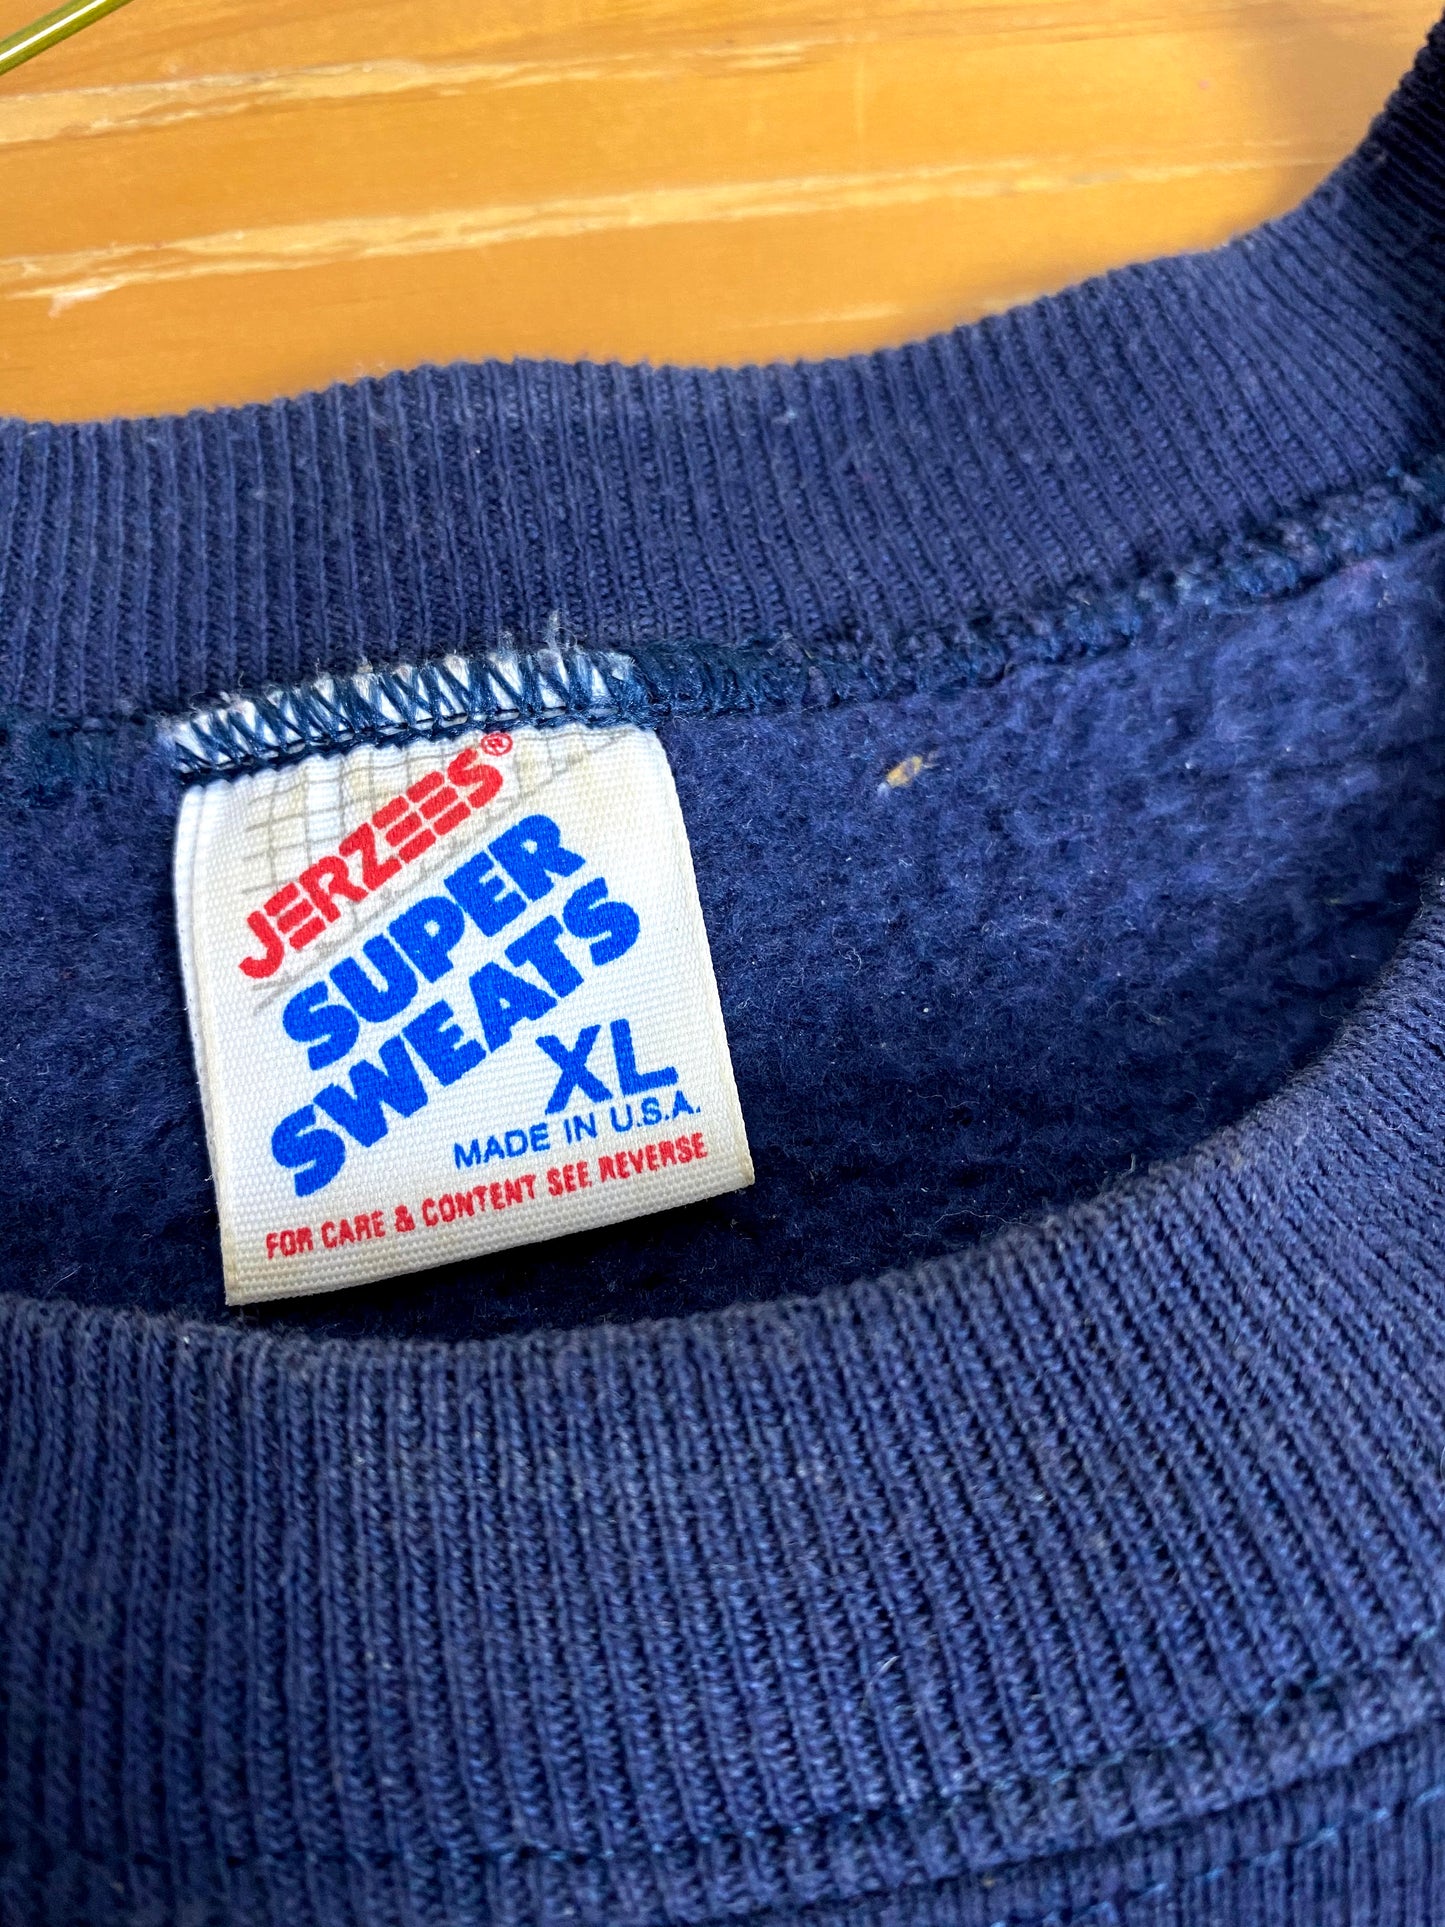 1992 Cowboys Super Bowl Champions Sweatshirt